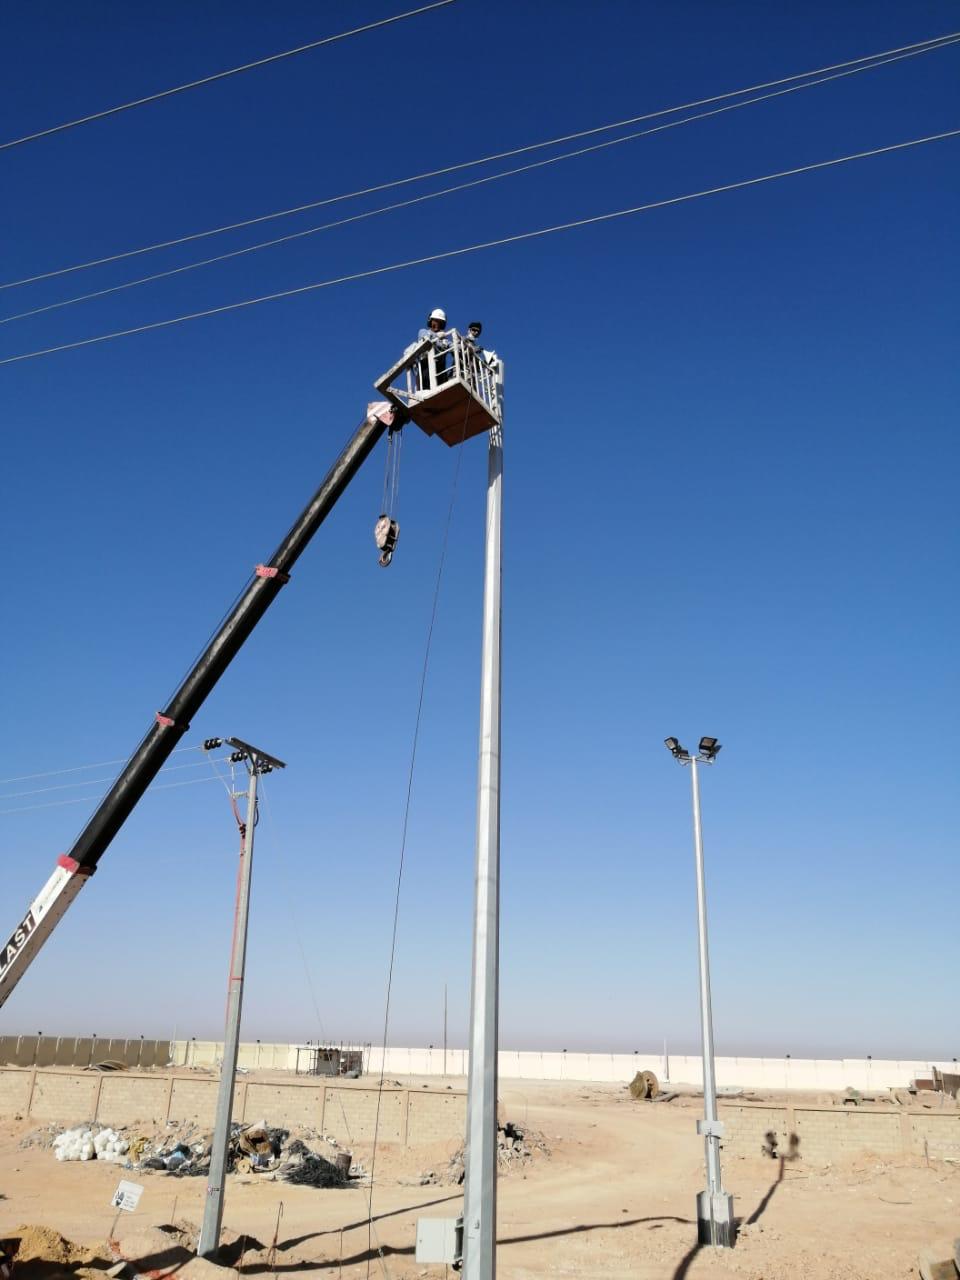 Camera Installation on Pole